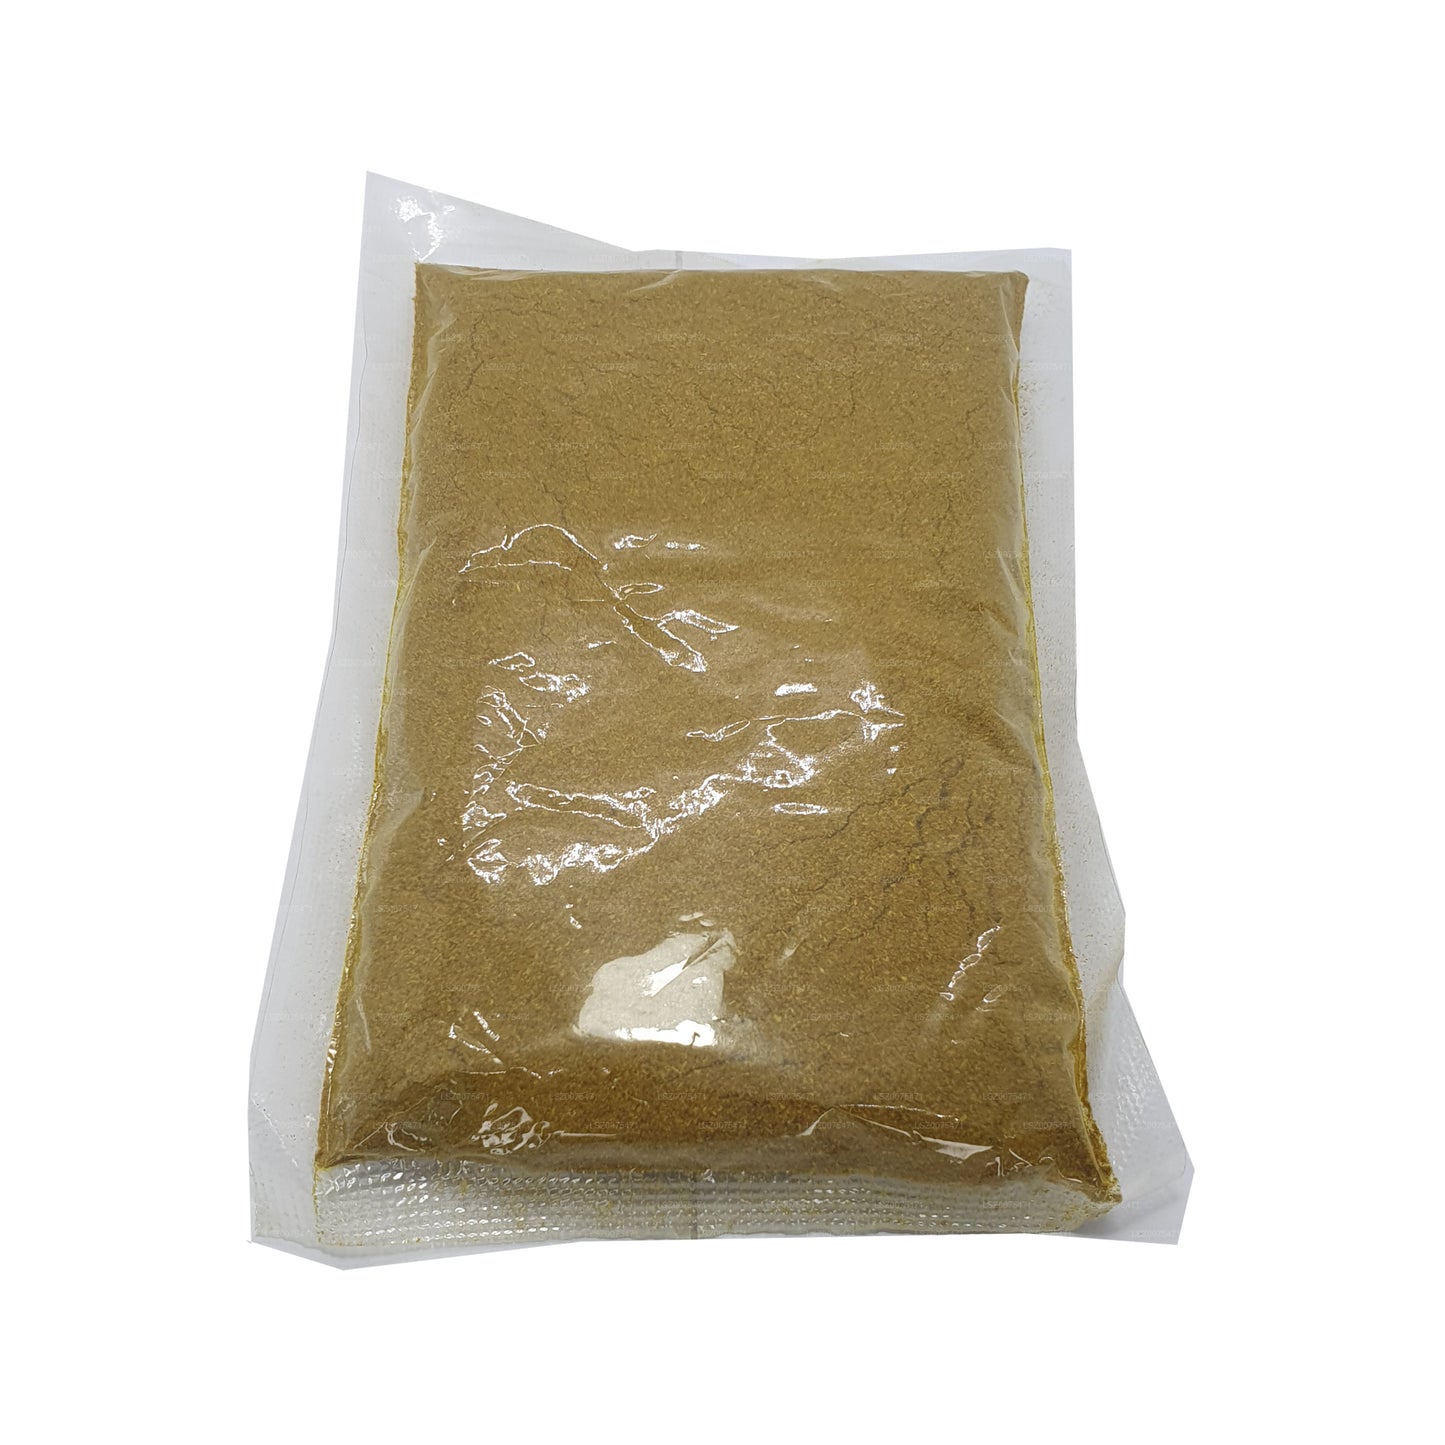 Ruhunu 咖喱粉 (100 g)